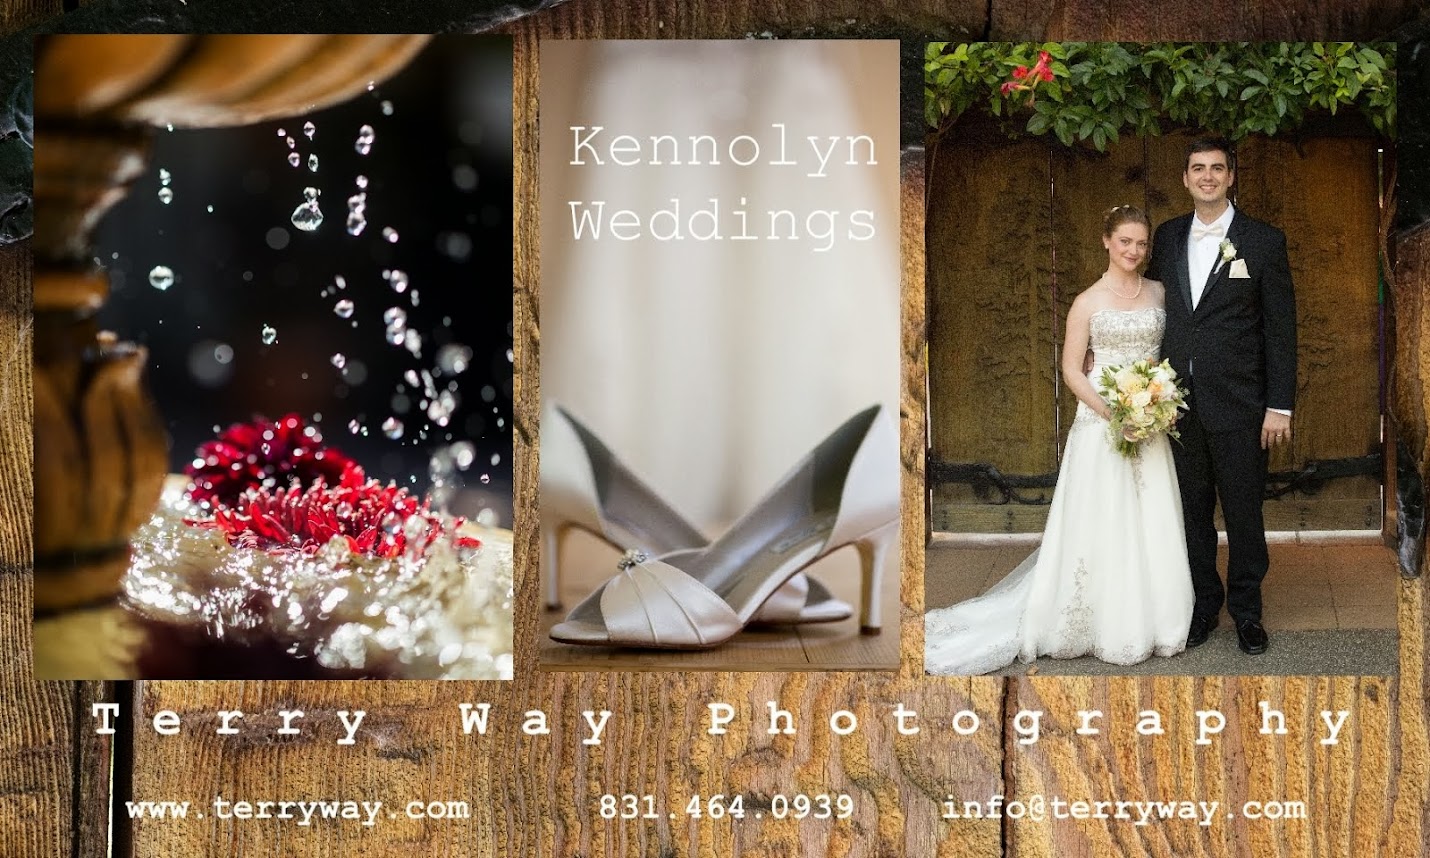 Kennolyn Wedding Photography by Terry Way